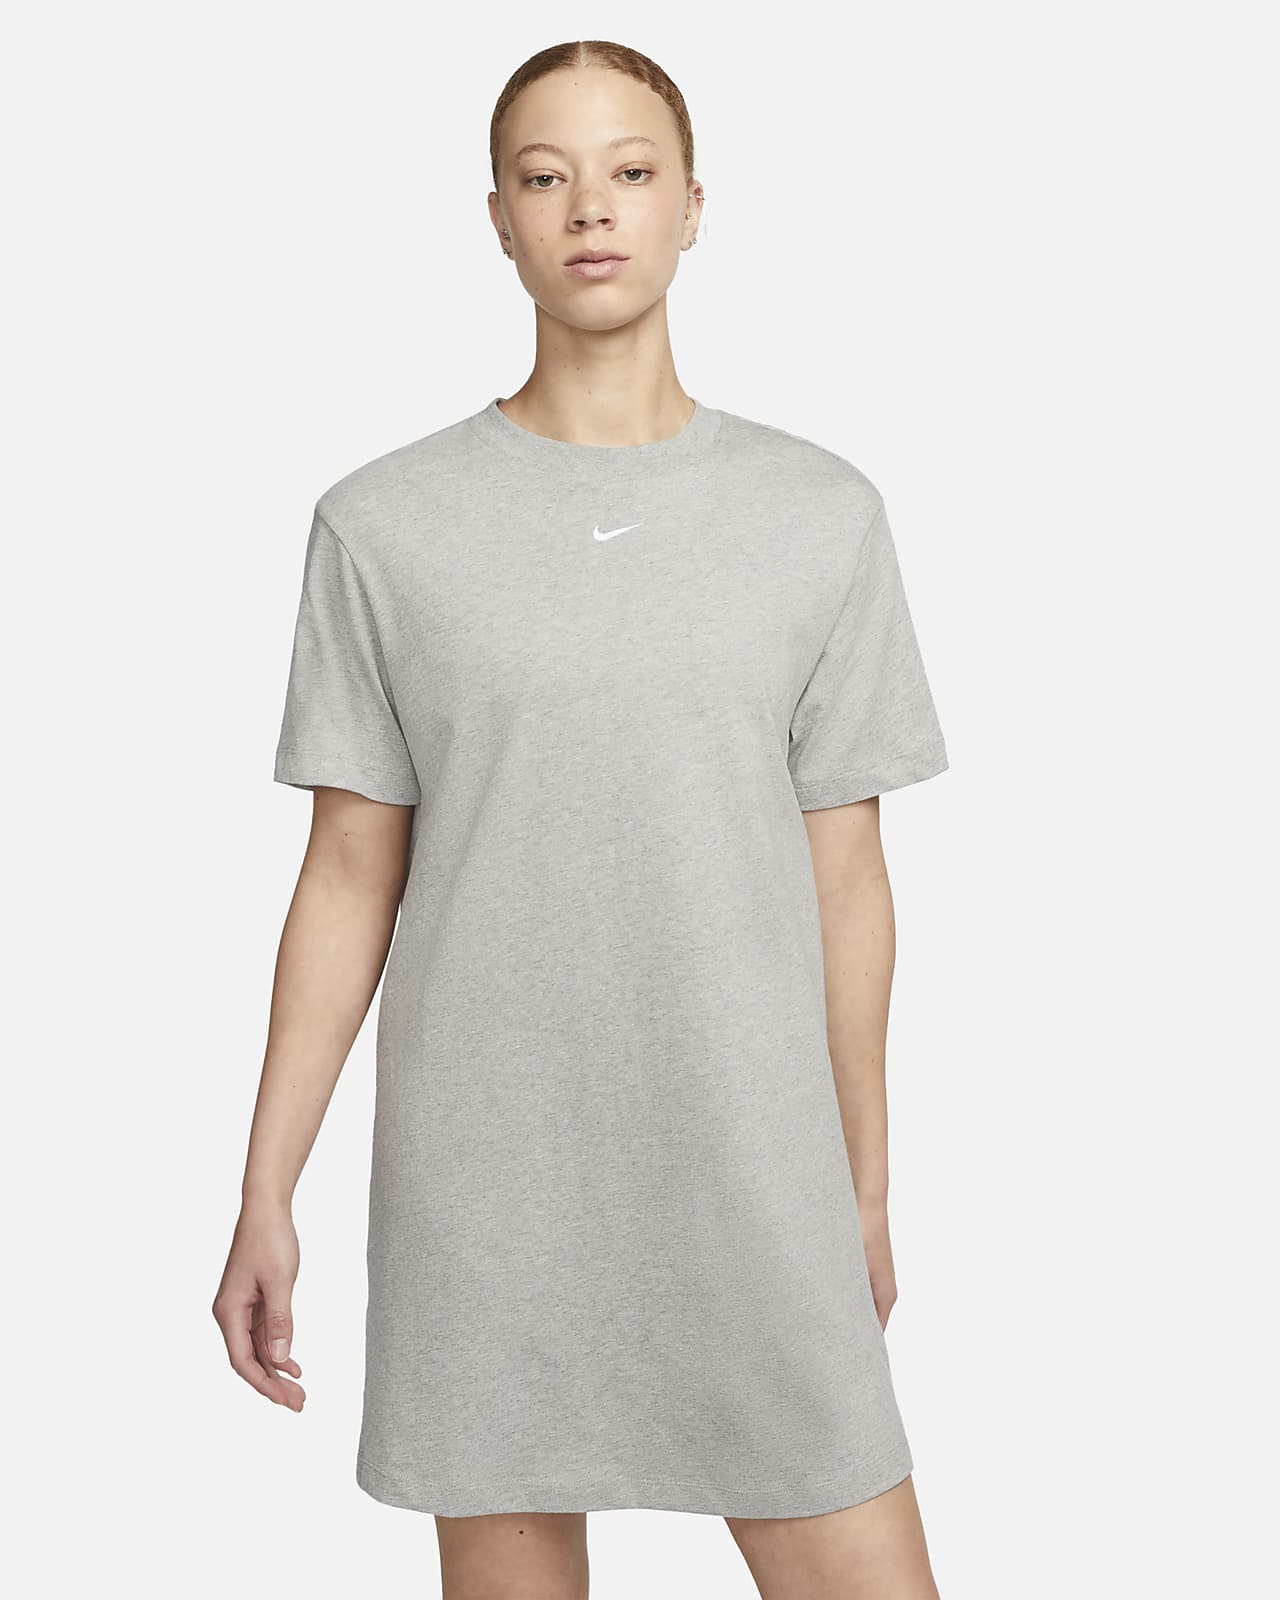 Nike Sportswear Chill Knit Women's Oversized T-Shirt Dress.